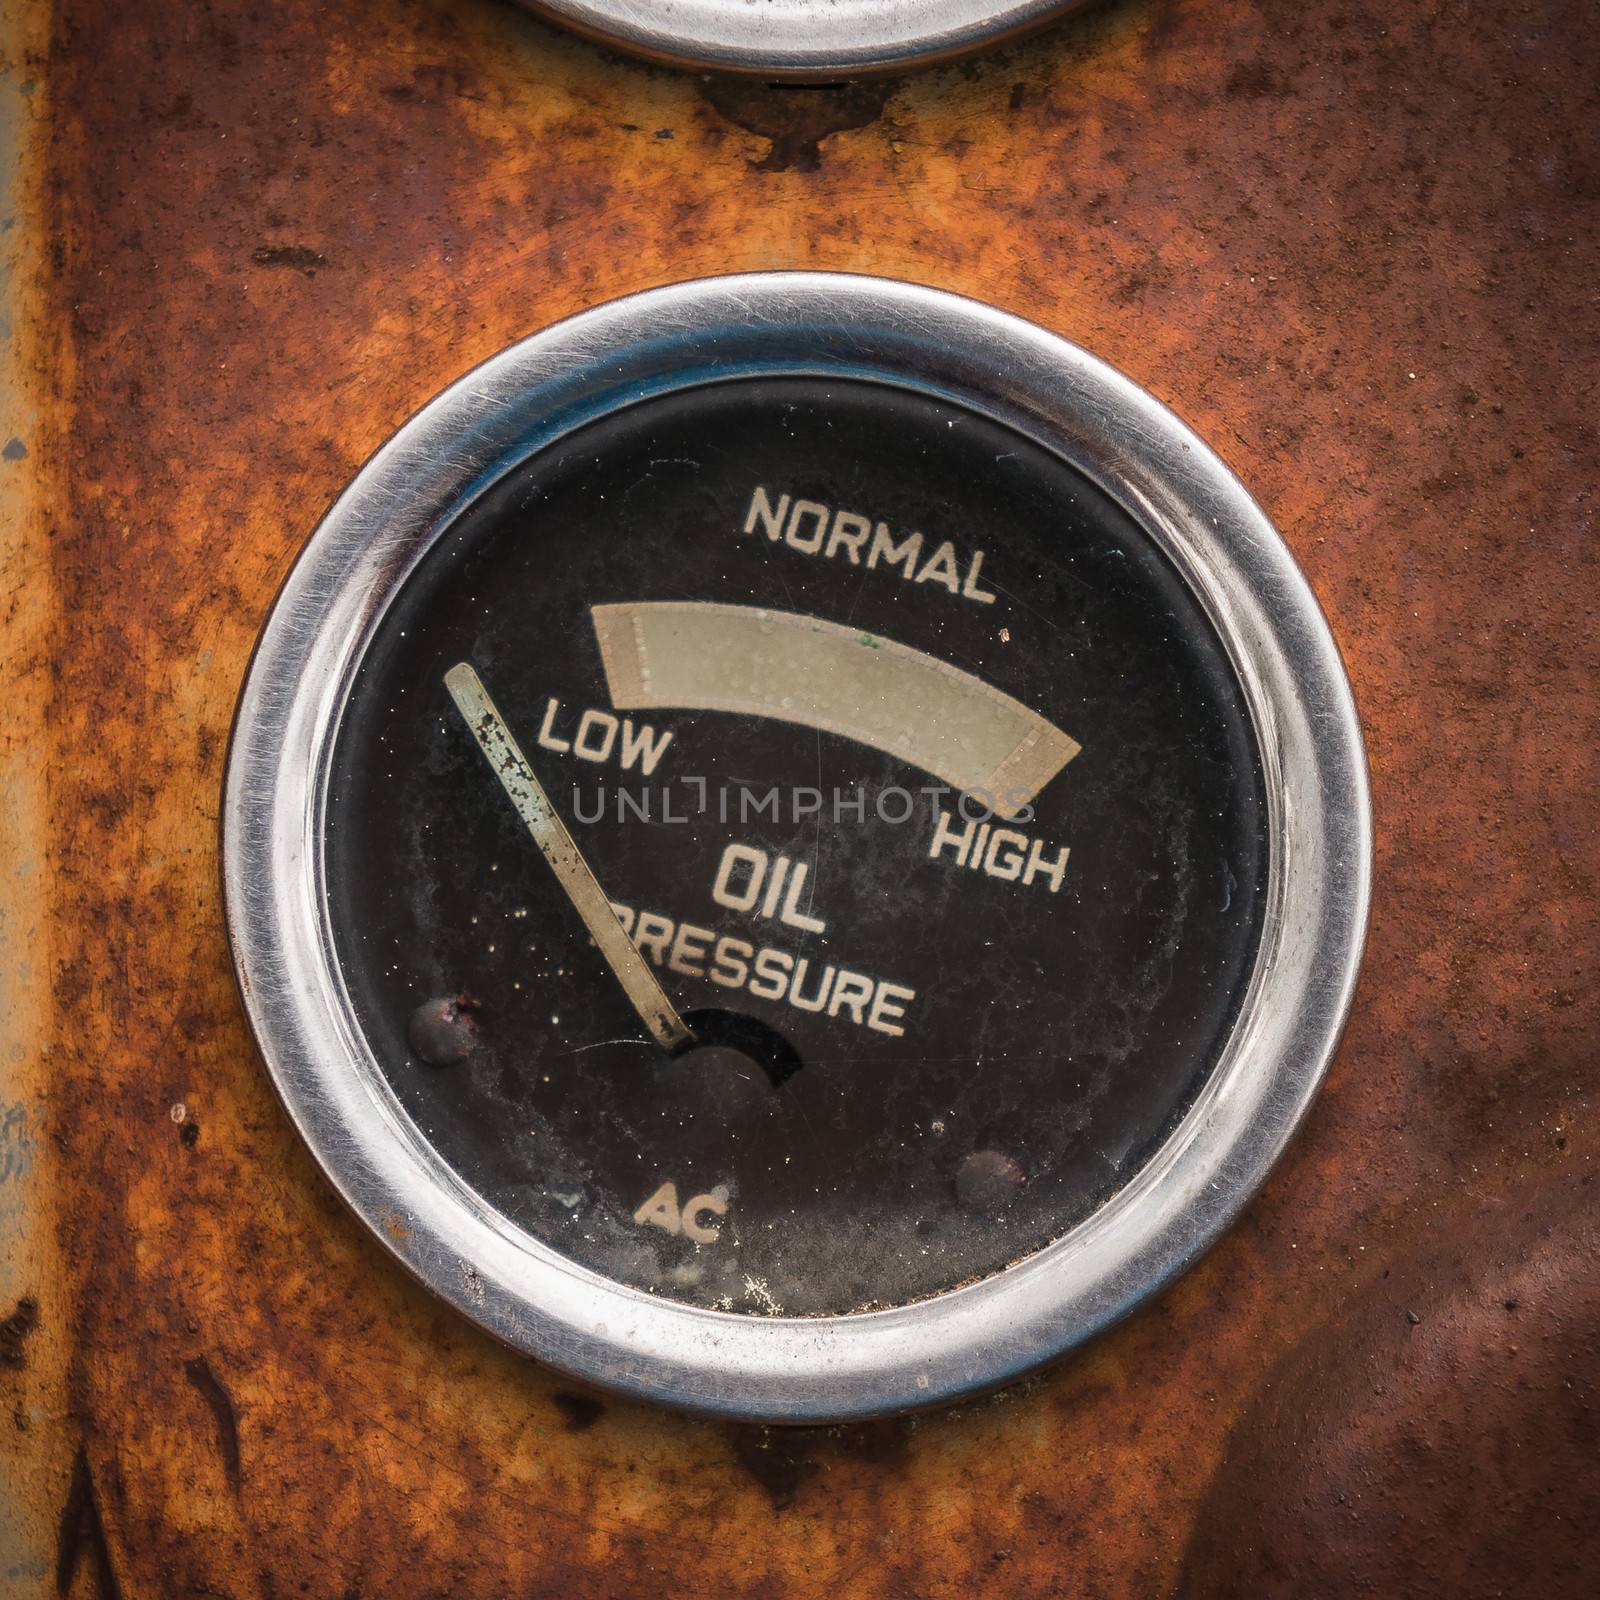 An old retro steampunk style oil pressure gauge